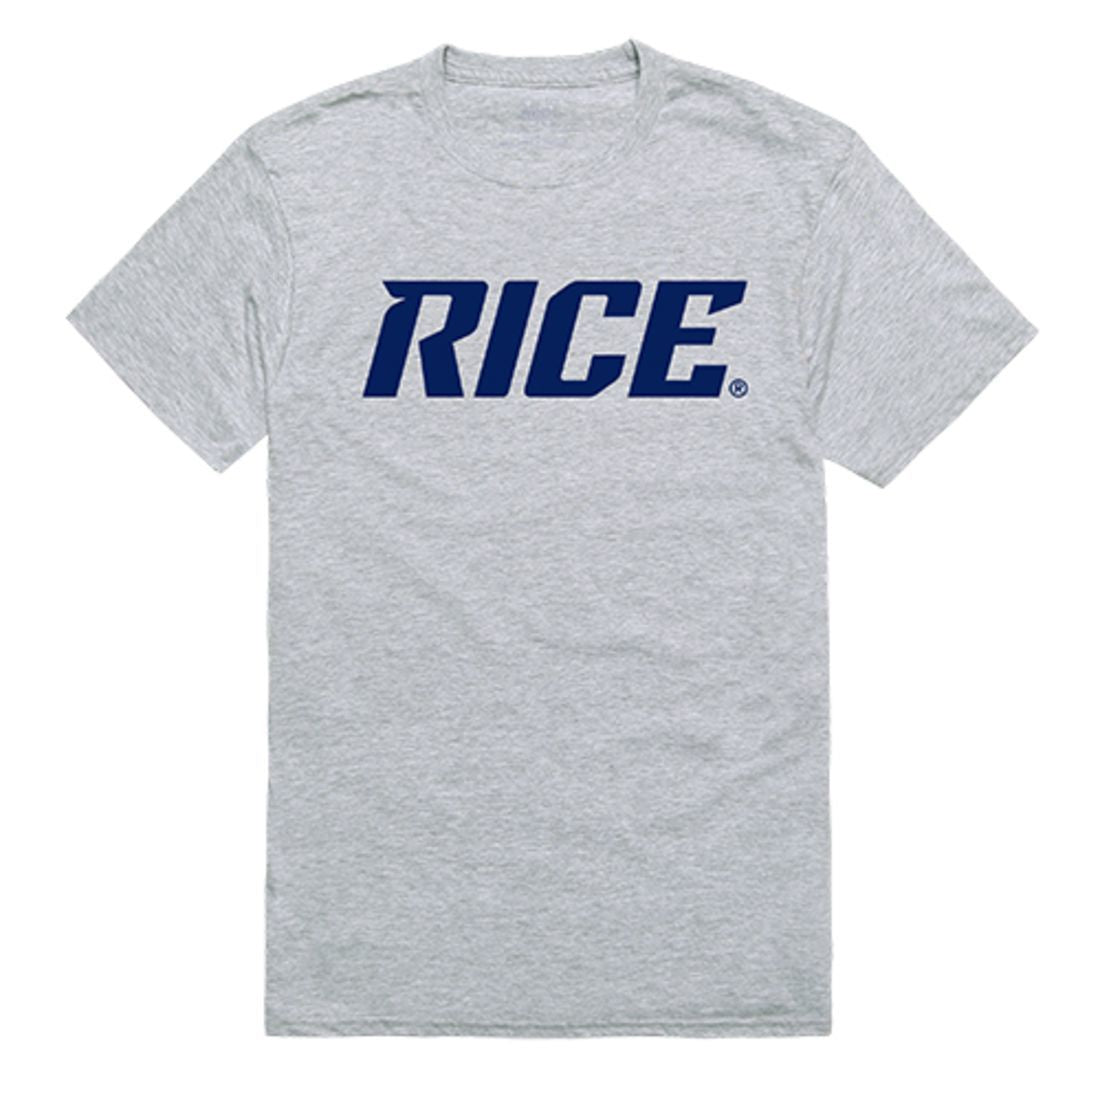 Rice University Game Day T-Shirt Heather Grey-Campus-Wardrobe